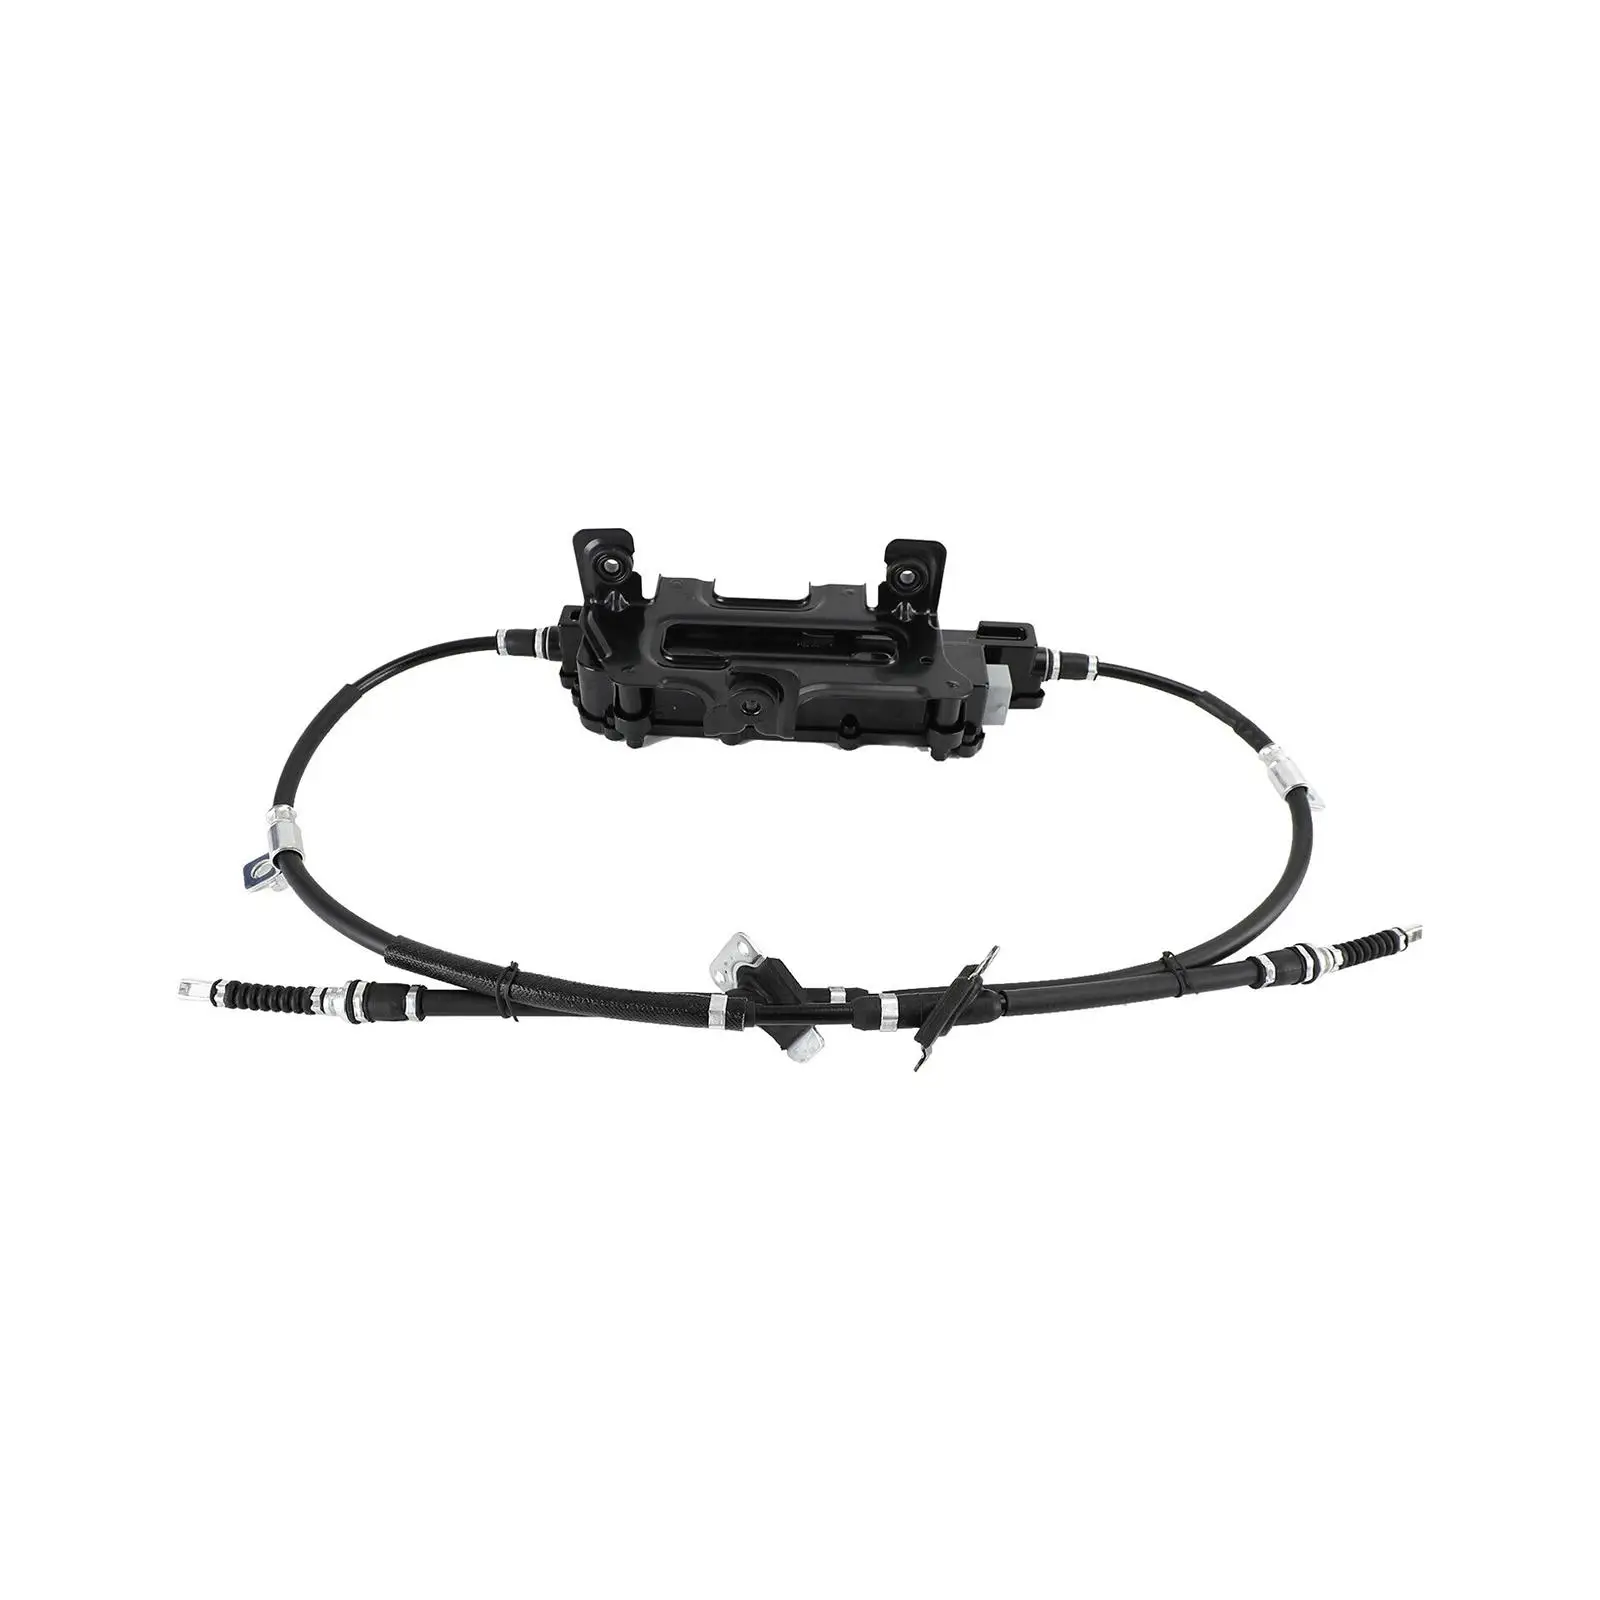 59700-b8700 Durable Spare Parts Car Accessories High Performance Parking Brake Actuator 597002W600 for Hyundai Max Cruz